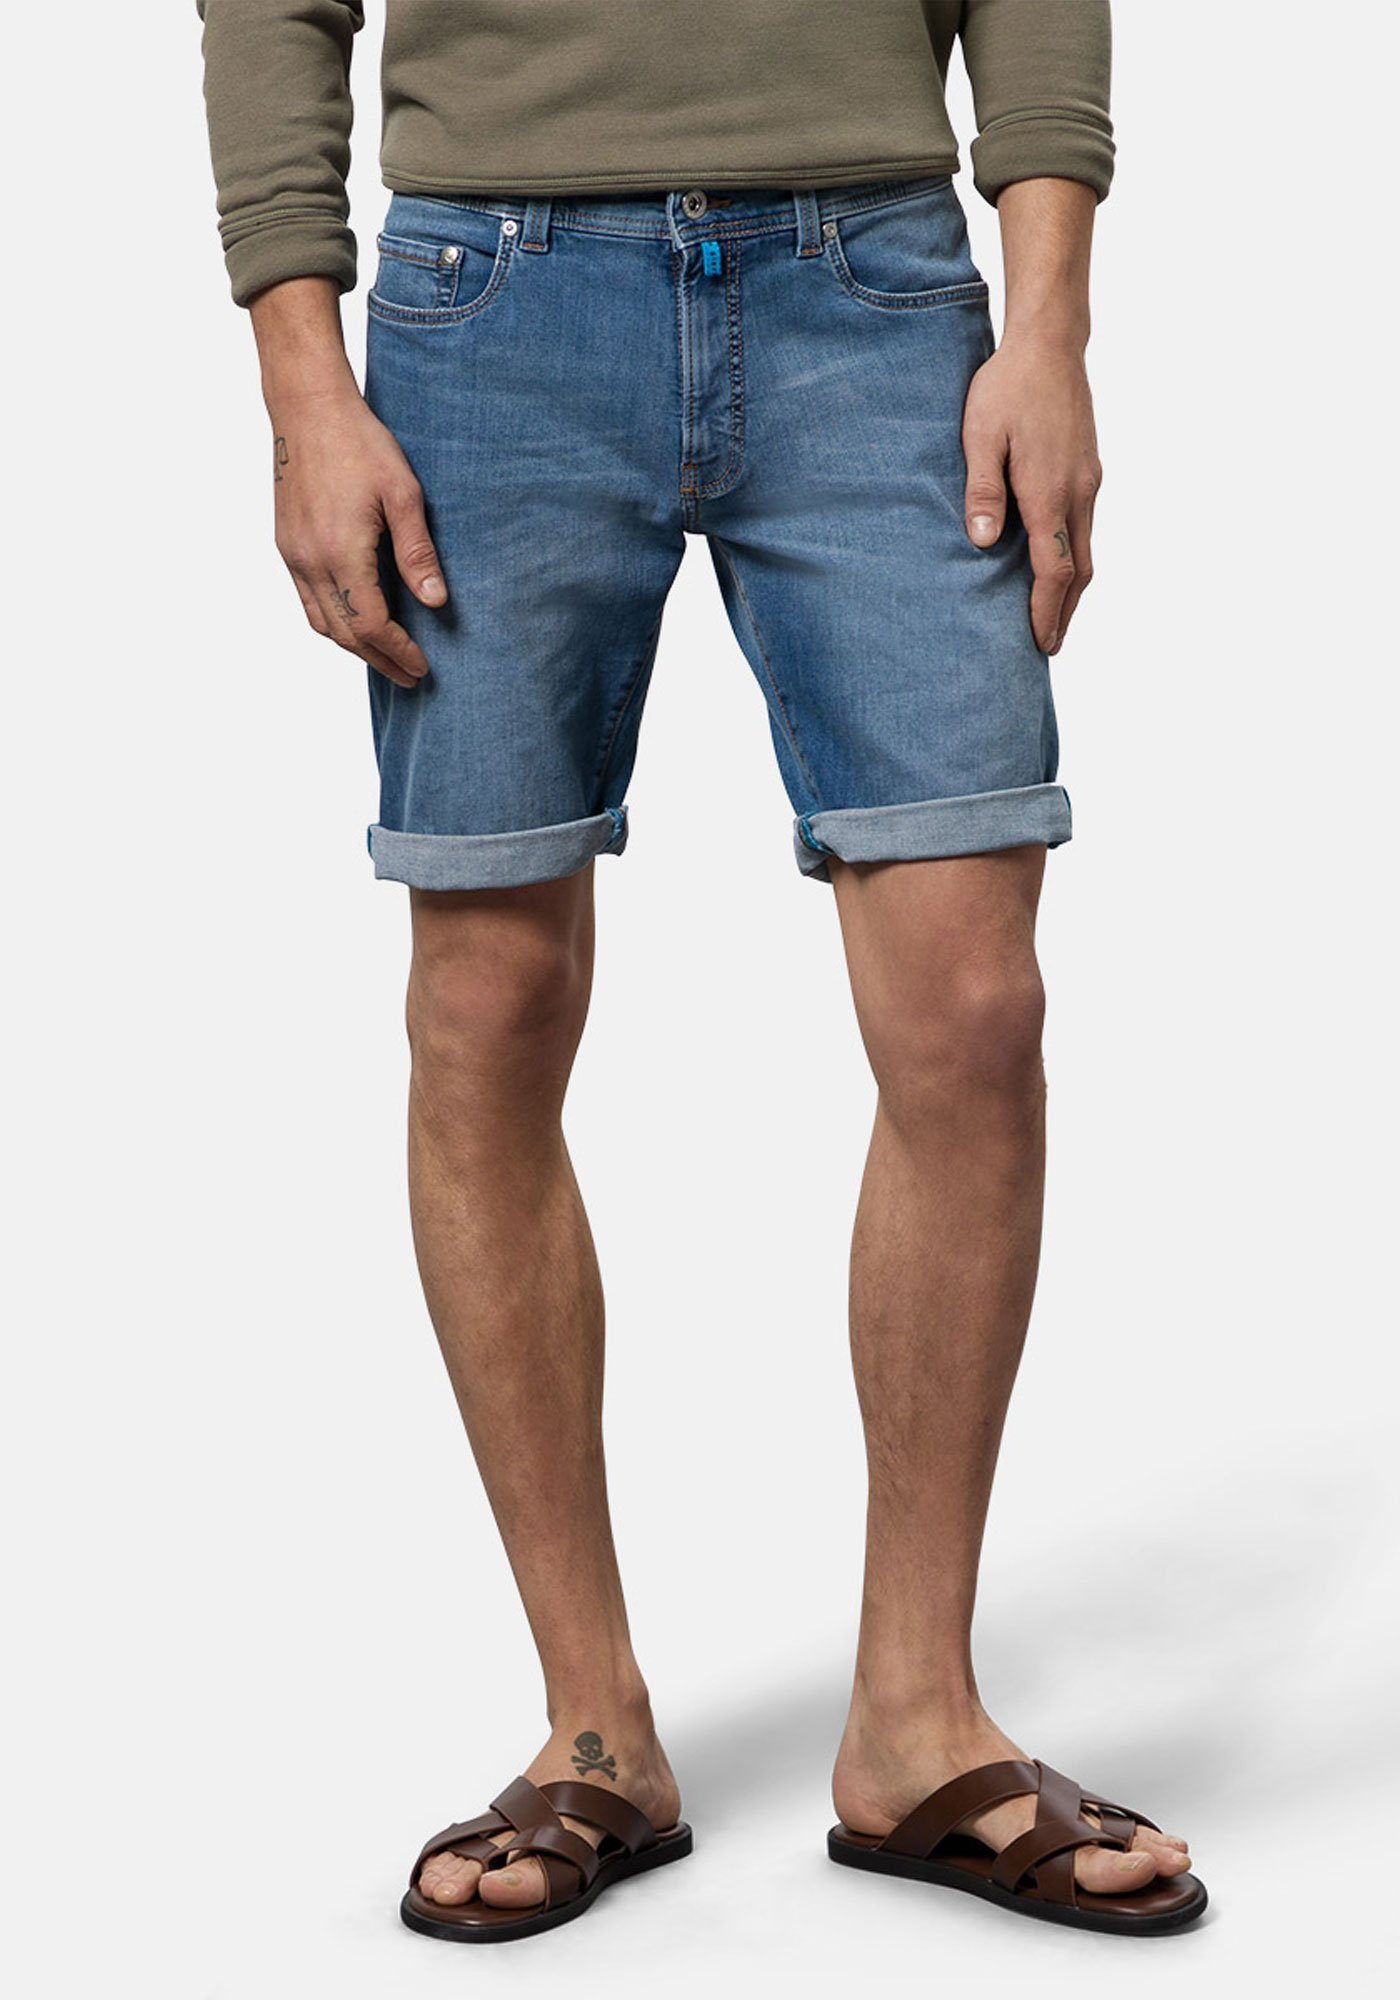 Pierre Cardin Jeansbermudas Lyon 5-Pocket Futureflex Denim Jeans Shorts